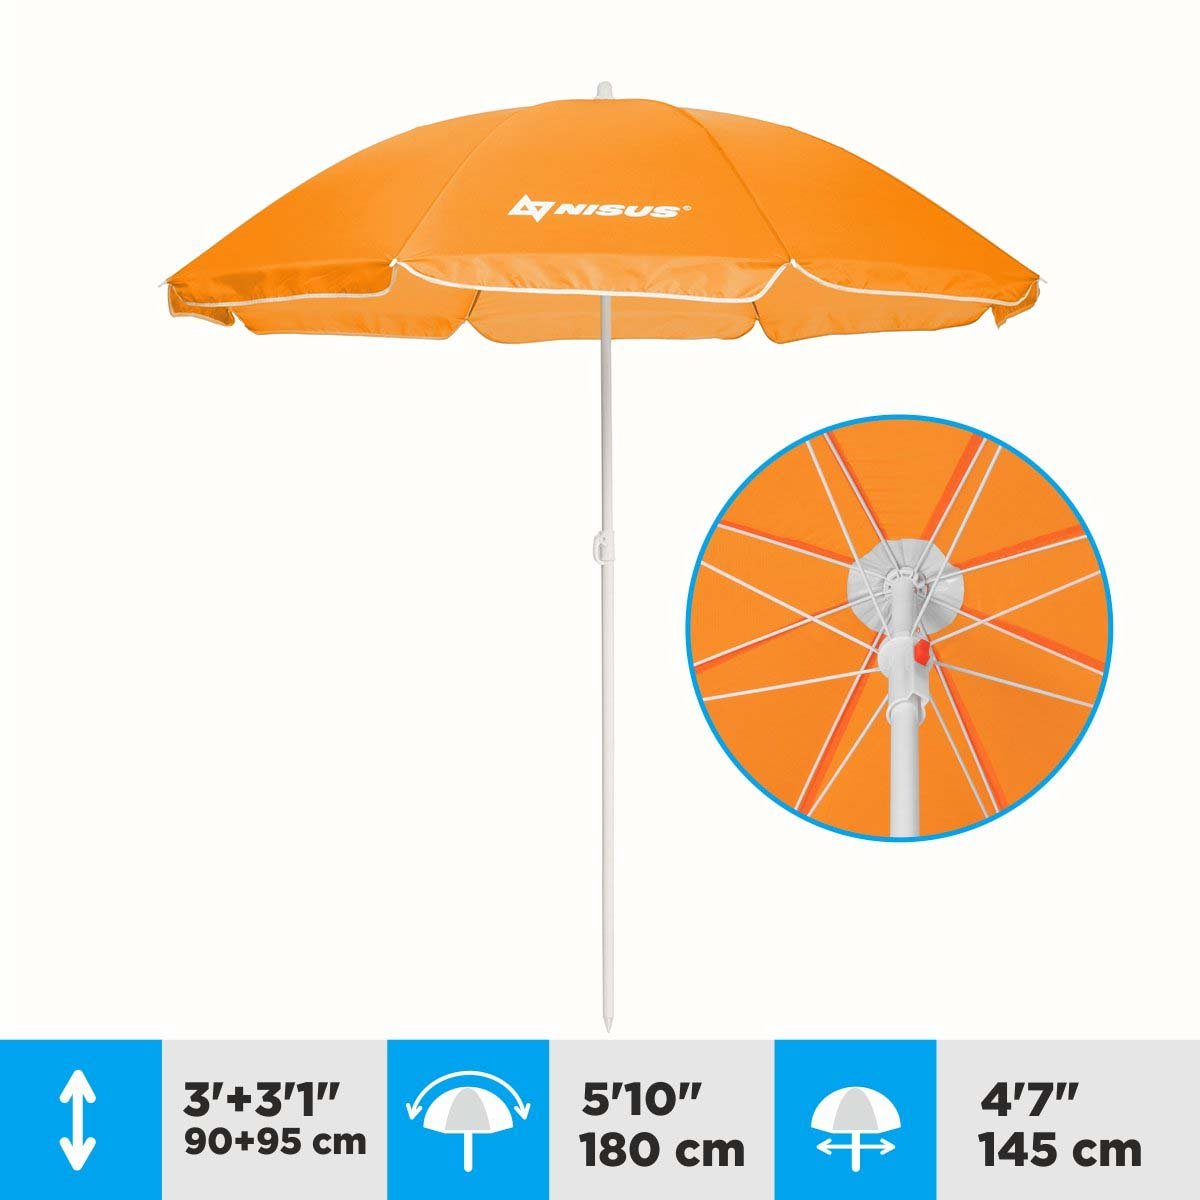 A 4.7 ft Orange Folding Beach Umbrella is 6.1 ft high